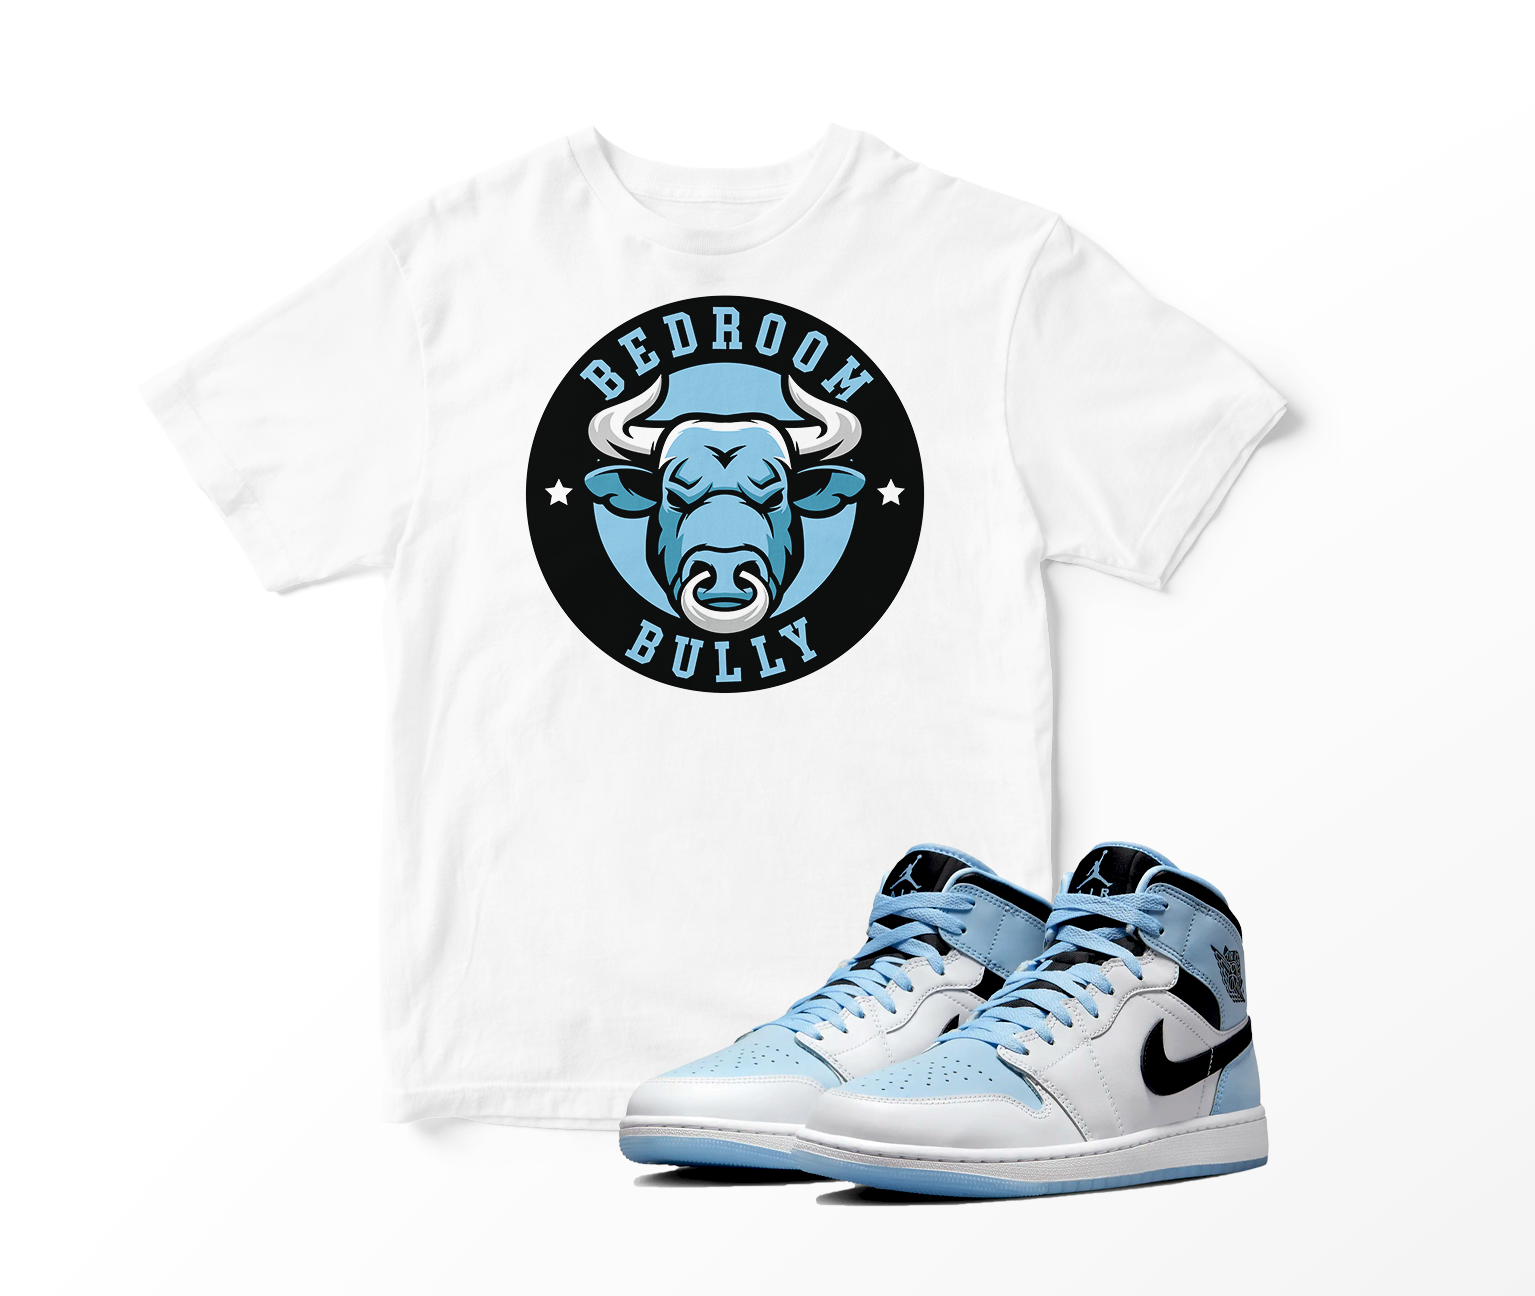 'Bedroom Bully' Custom Graphic Short Sleeve T-Shirt To Match Air Jordan 1 White Ice